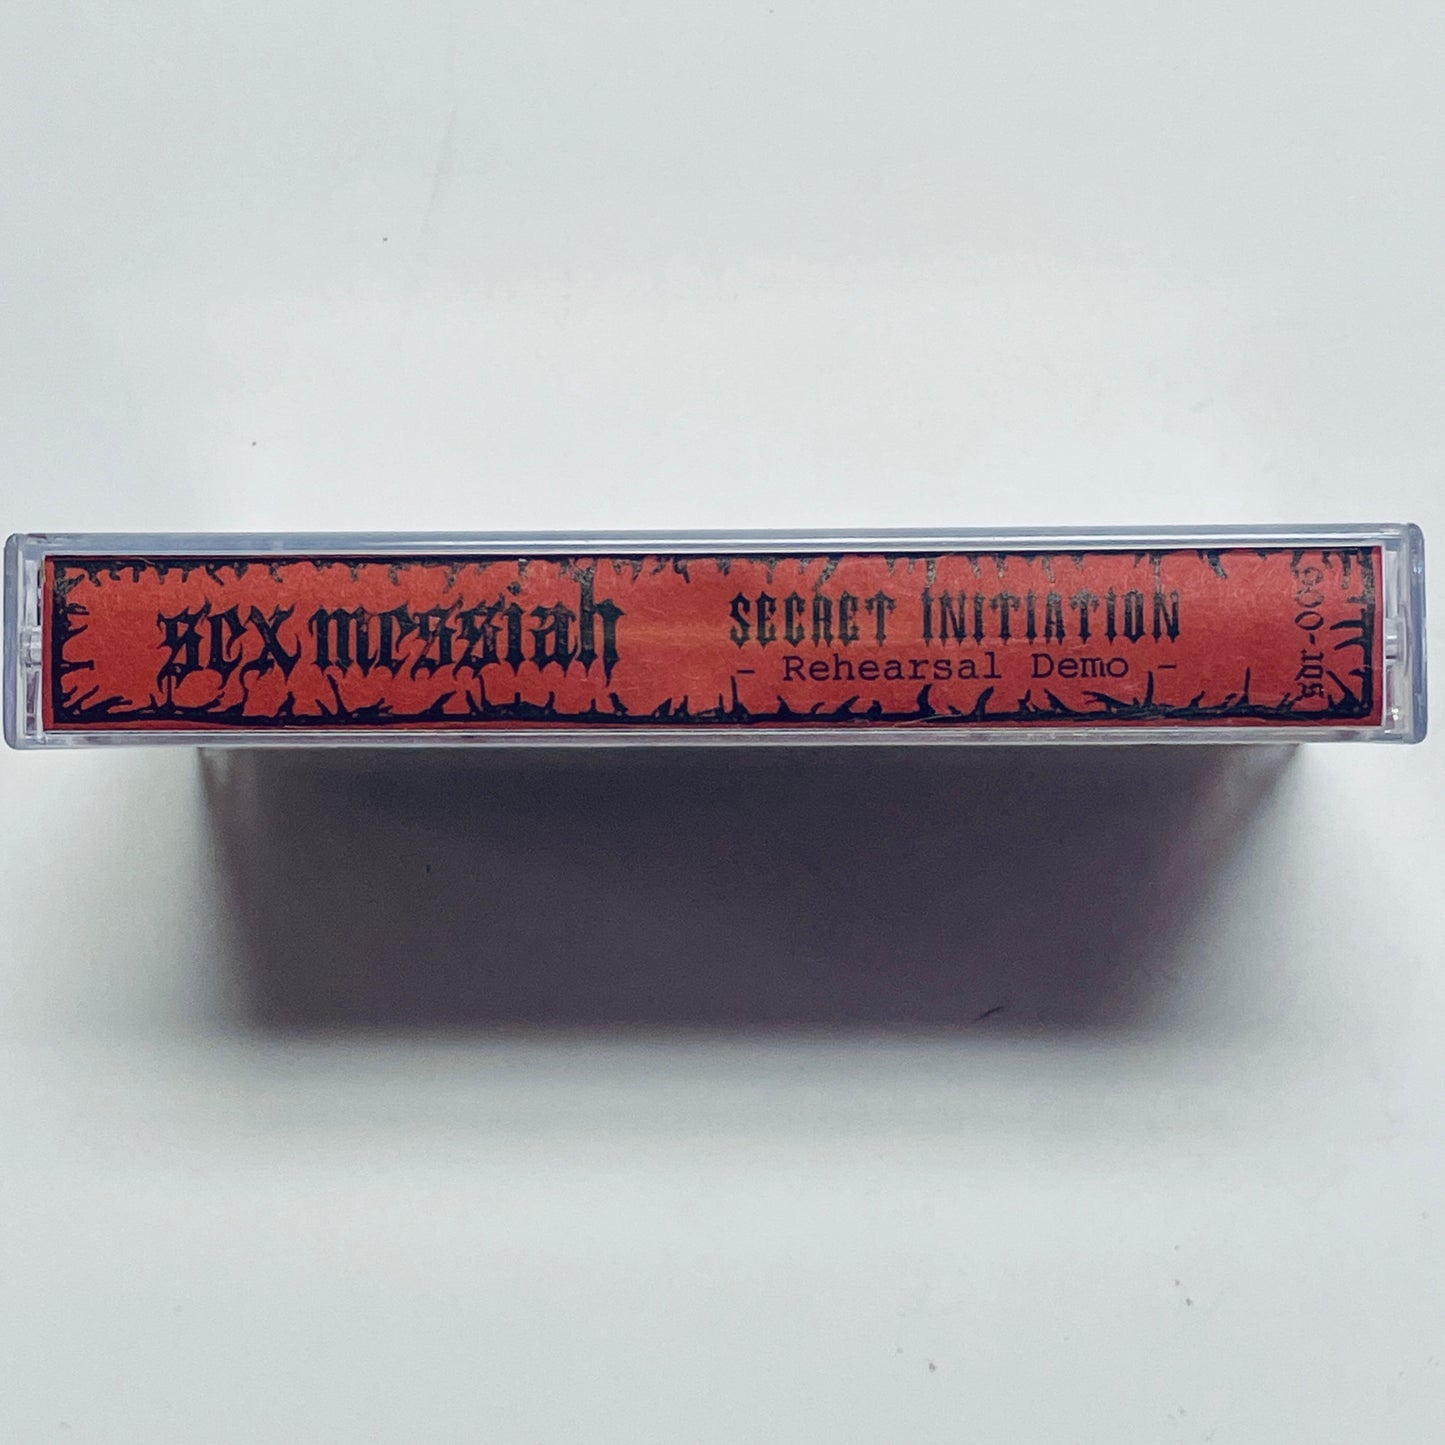 Sex Messiah – Secret Initiation - Rehearsal Demo cassette tape (used)